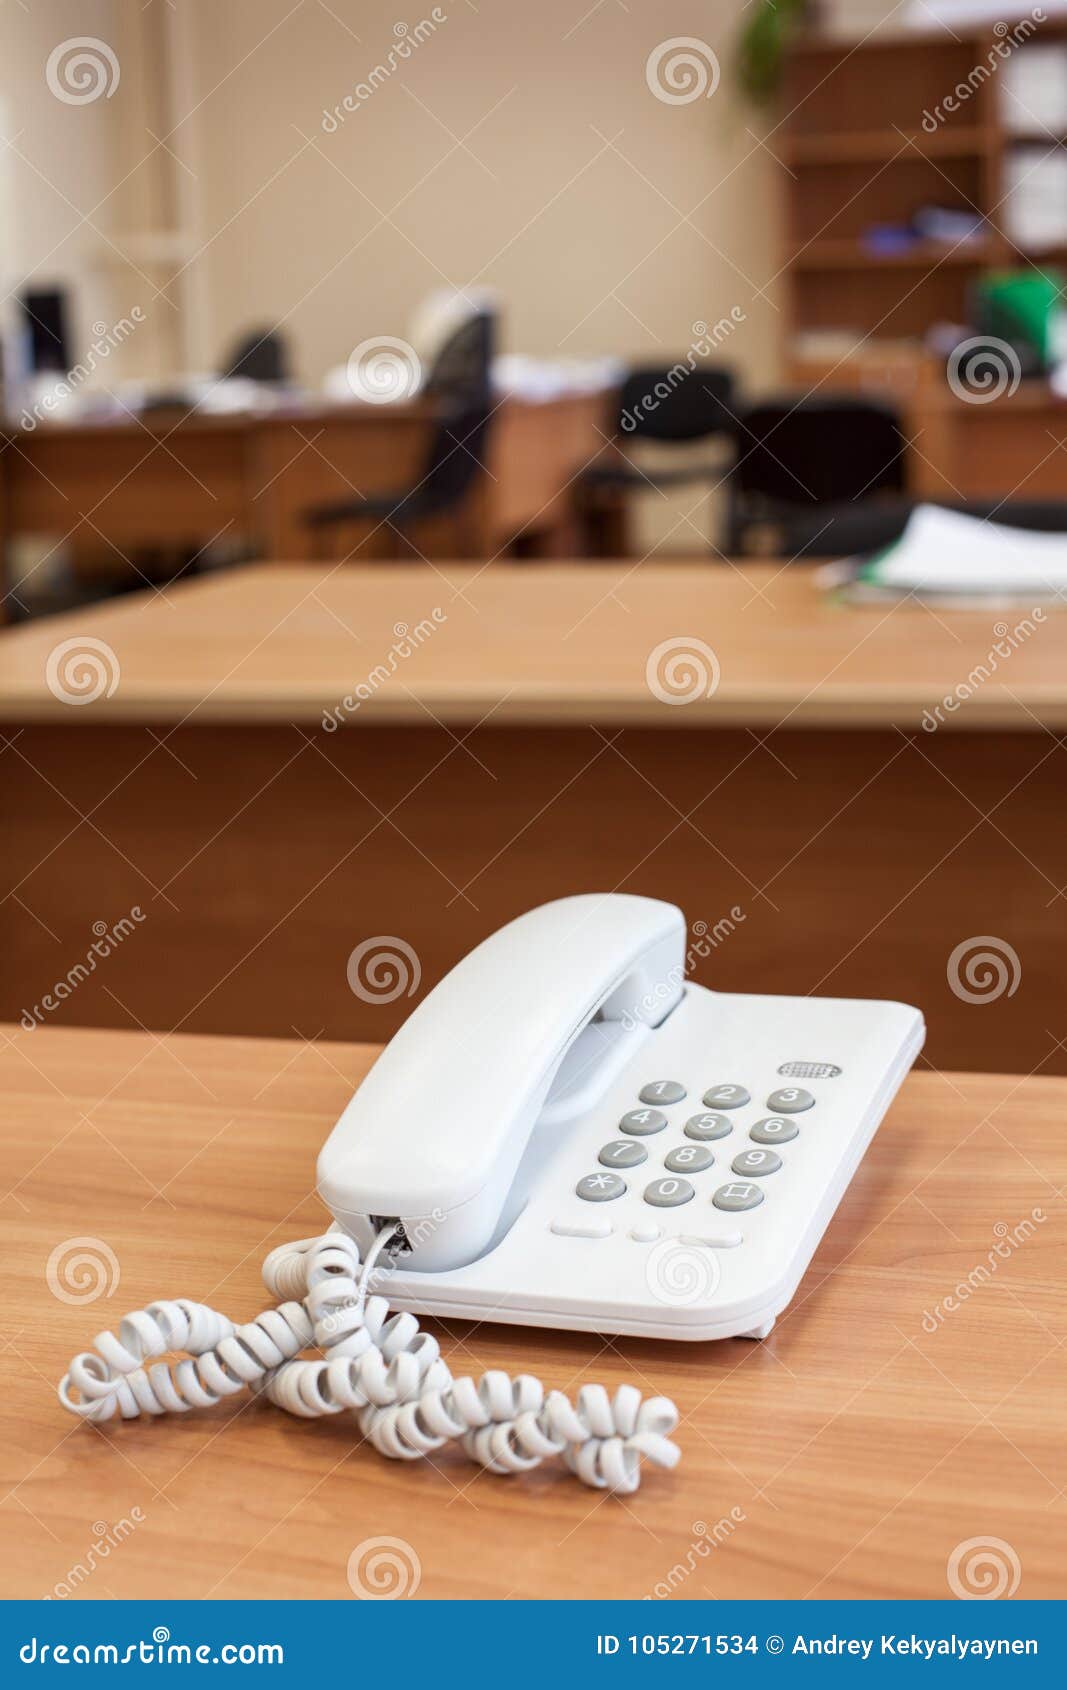 Bewinner Teléfono Cableado,Teléfono Fijo con Función de Flash/Silenciamiento/Última Remarcación de Números,Teléfono de Escritorio para Casa,Oficina,Hotel Blanco 